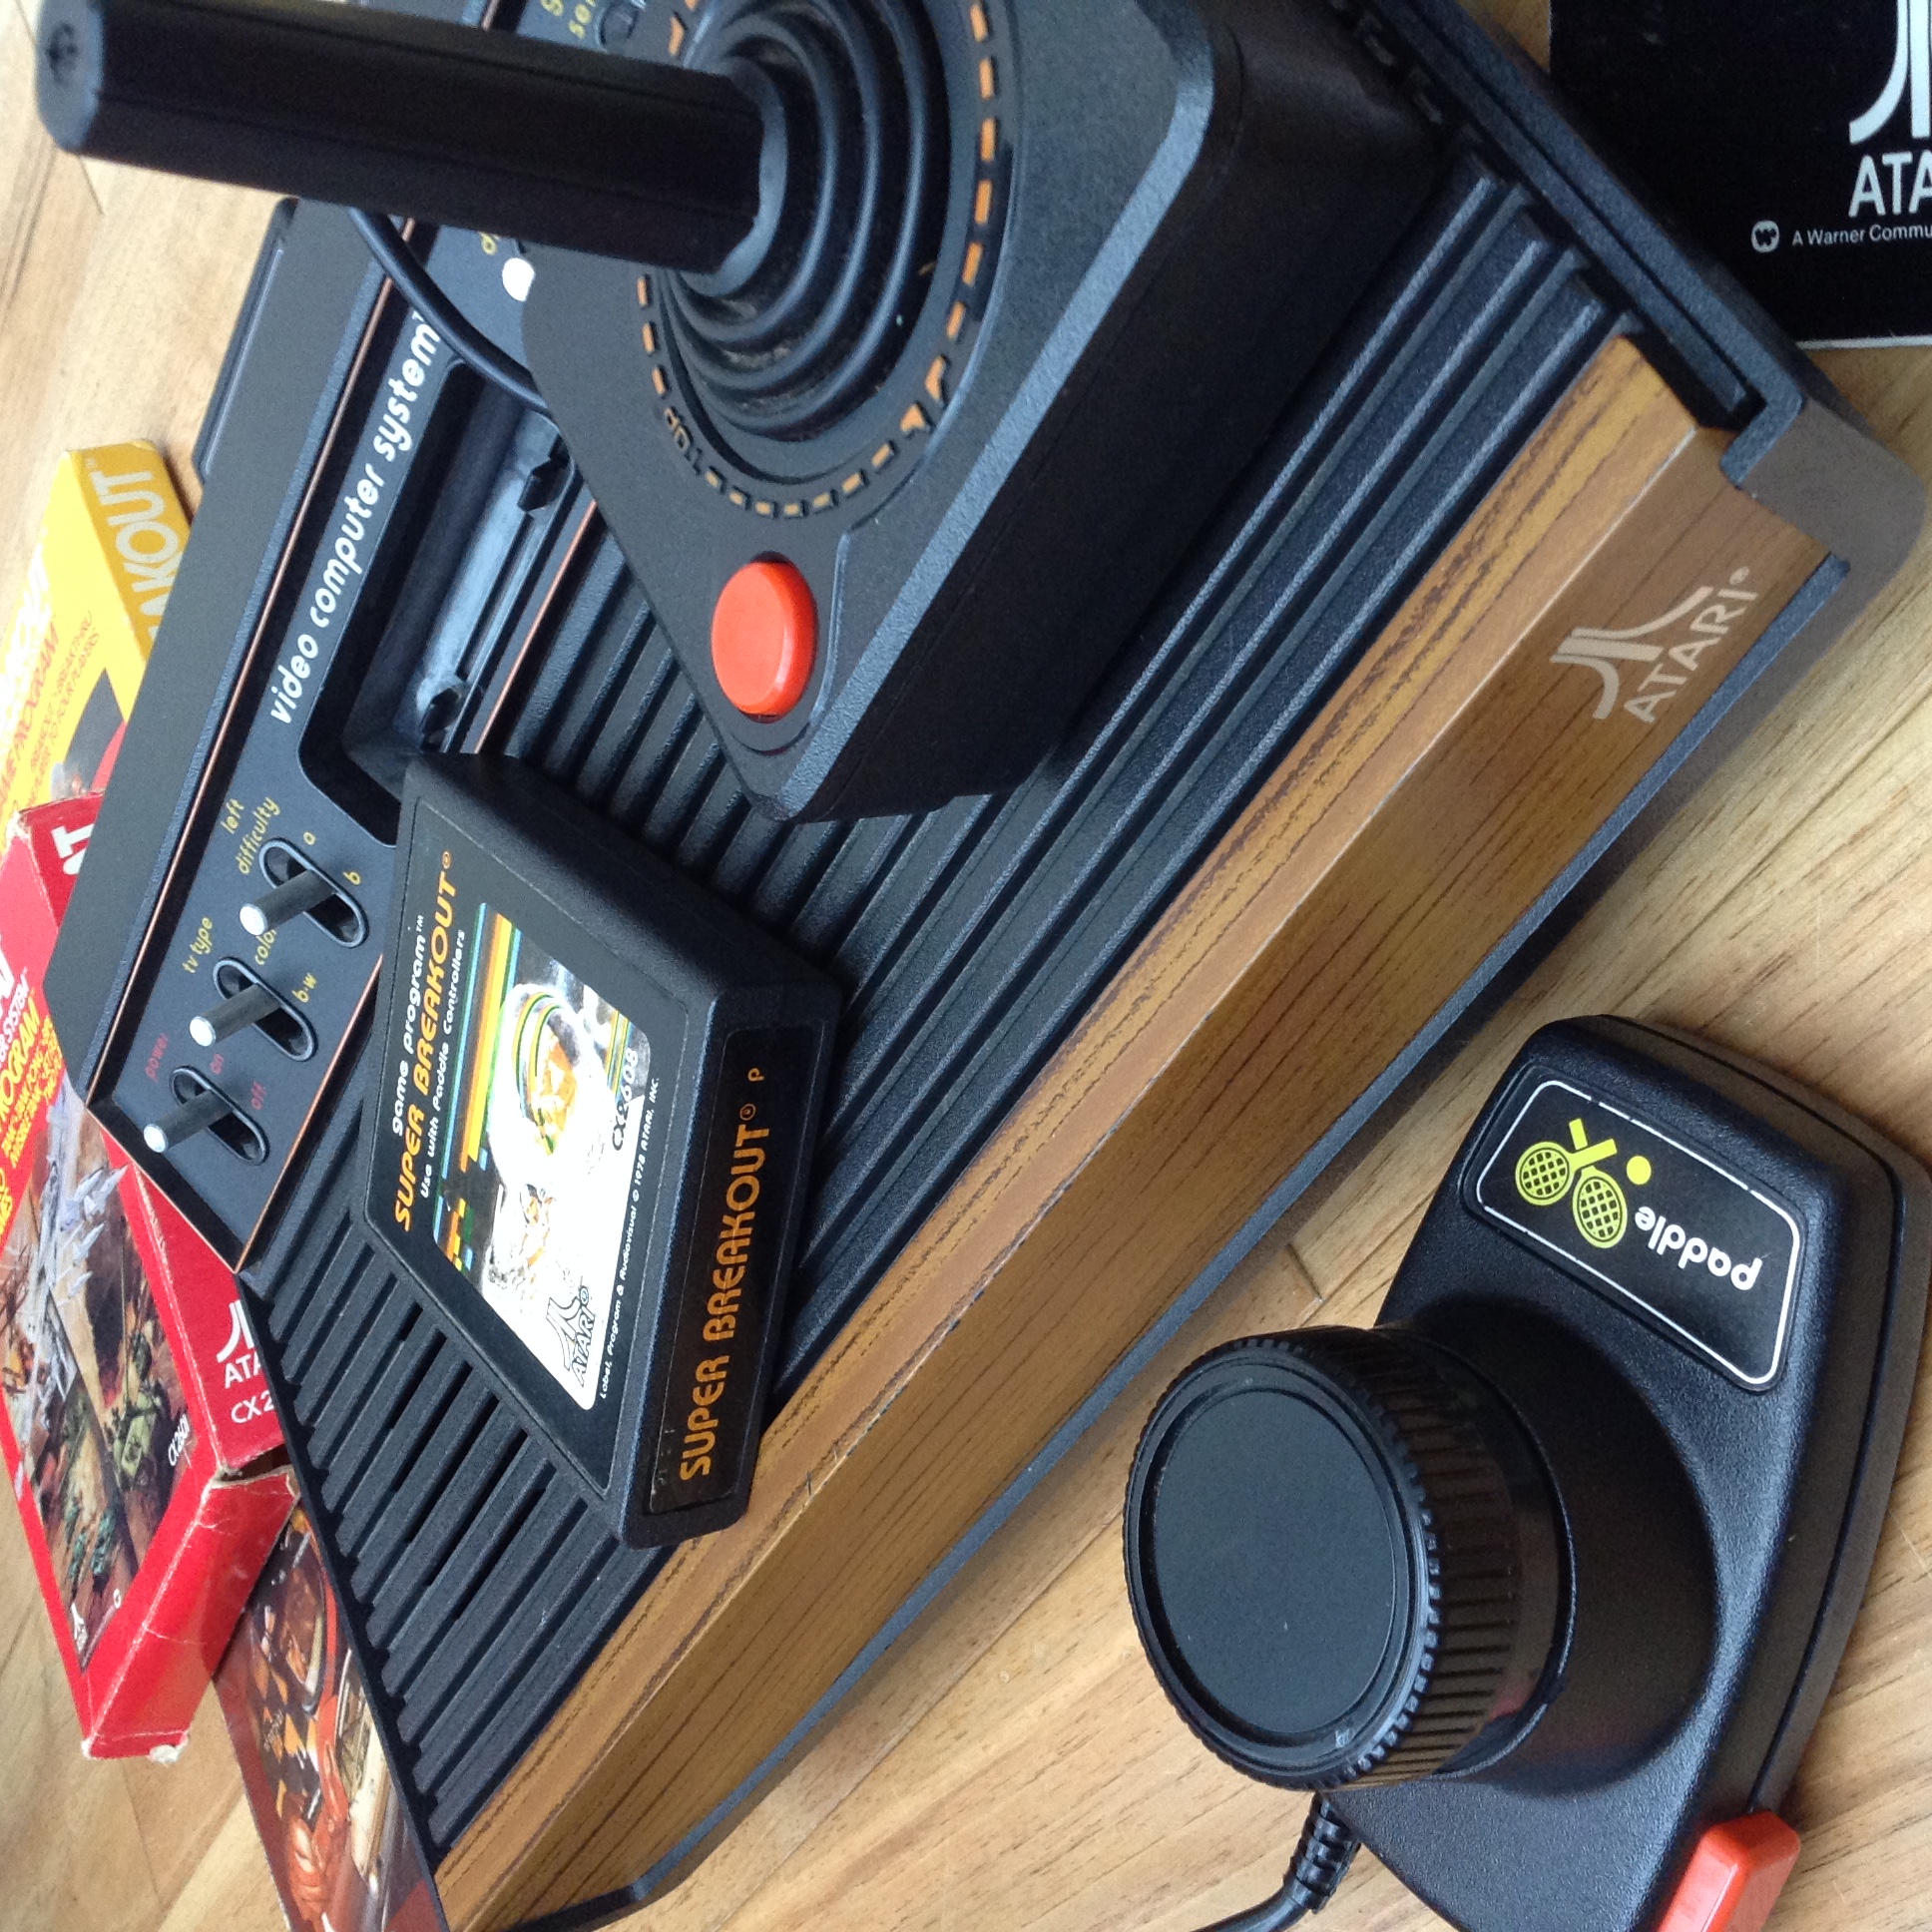 CX 2600 U Dimerco - Atari 2600 - AtariAge Forums
